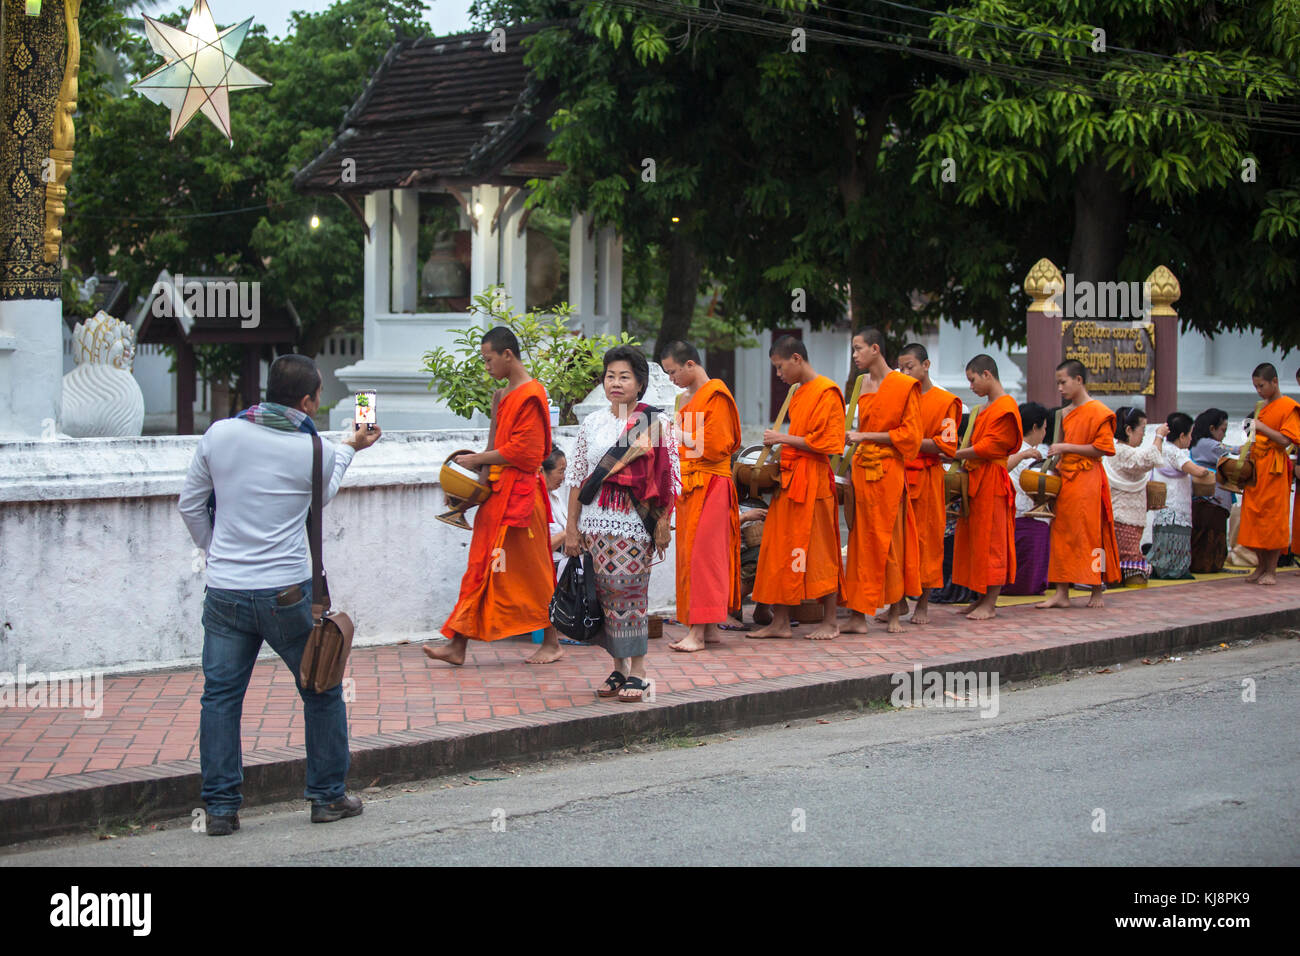 Luang Prabang, Laos - November 19, 2017: Torists taking photos of buddhist monks on everyday morning traditional alms giving in Luang Prabang, Laos. Stock Photo